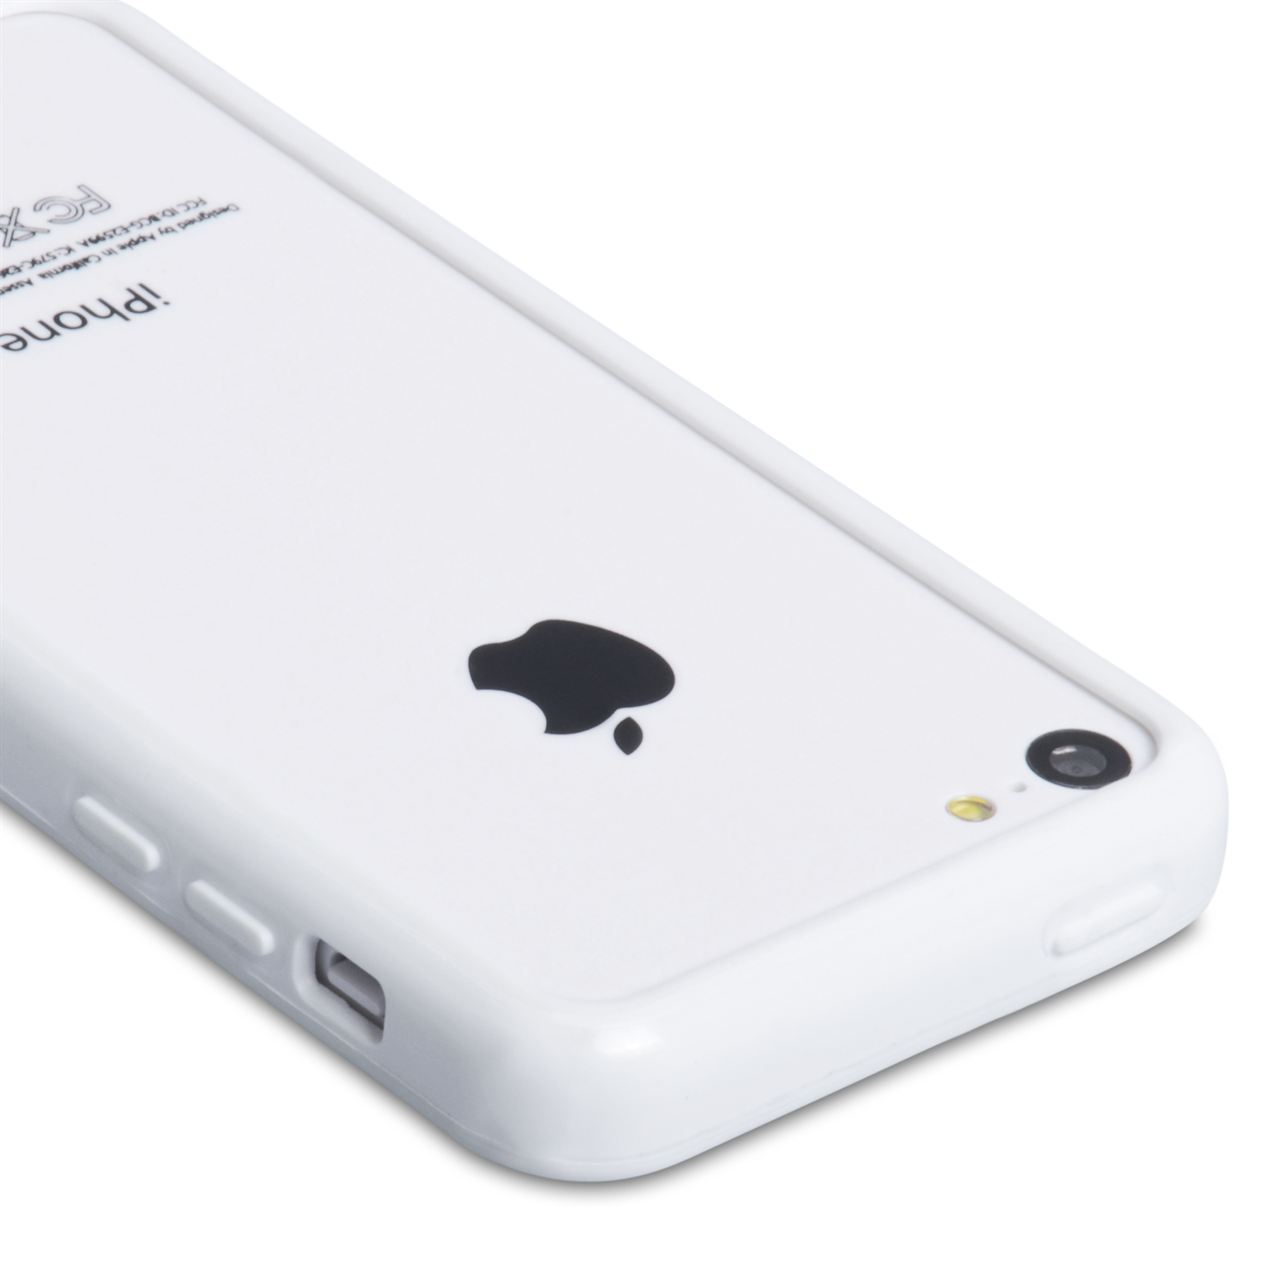 YouSave Accessories iPhone 5C Bumper Case - White